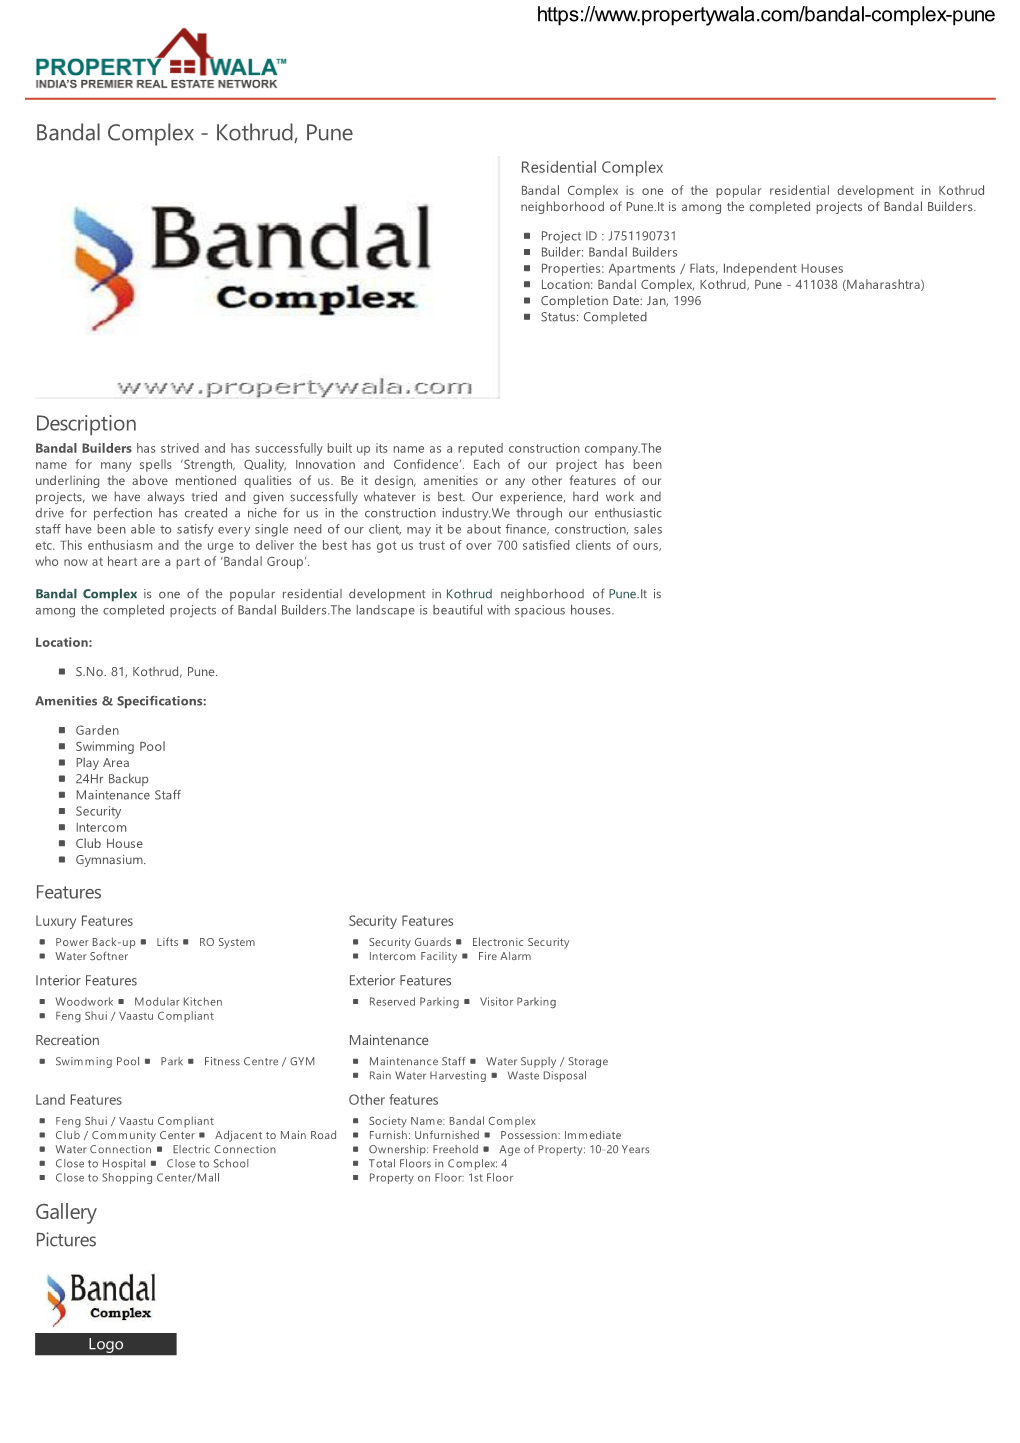 Bandal Complex